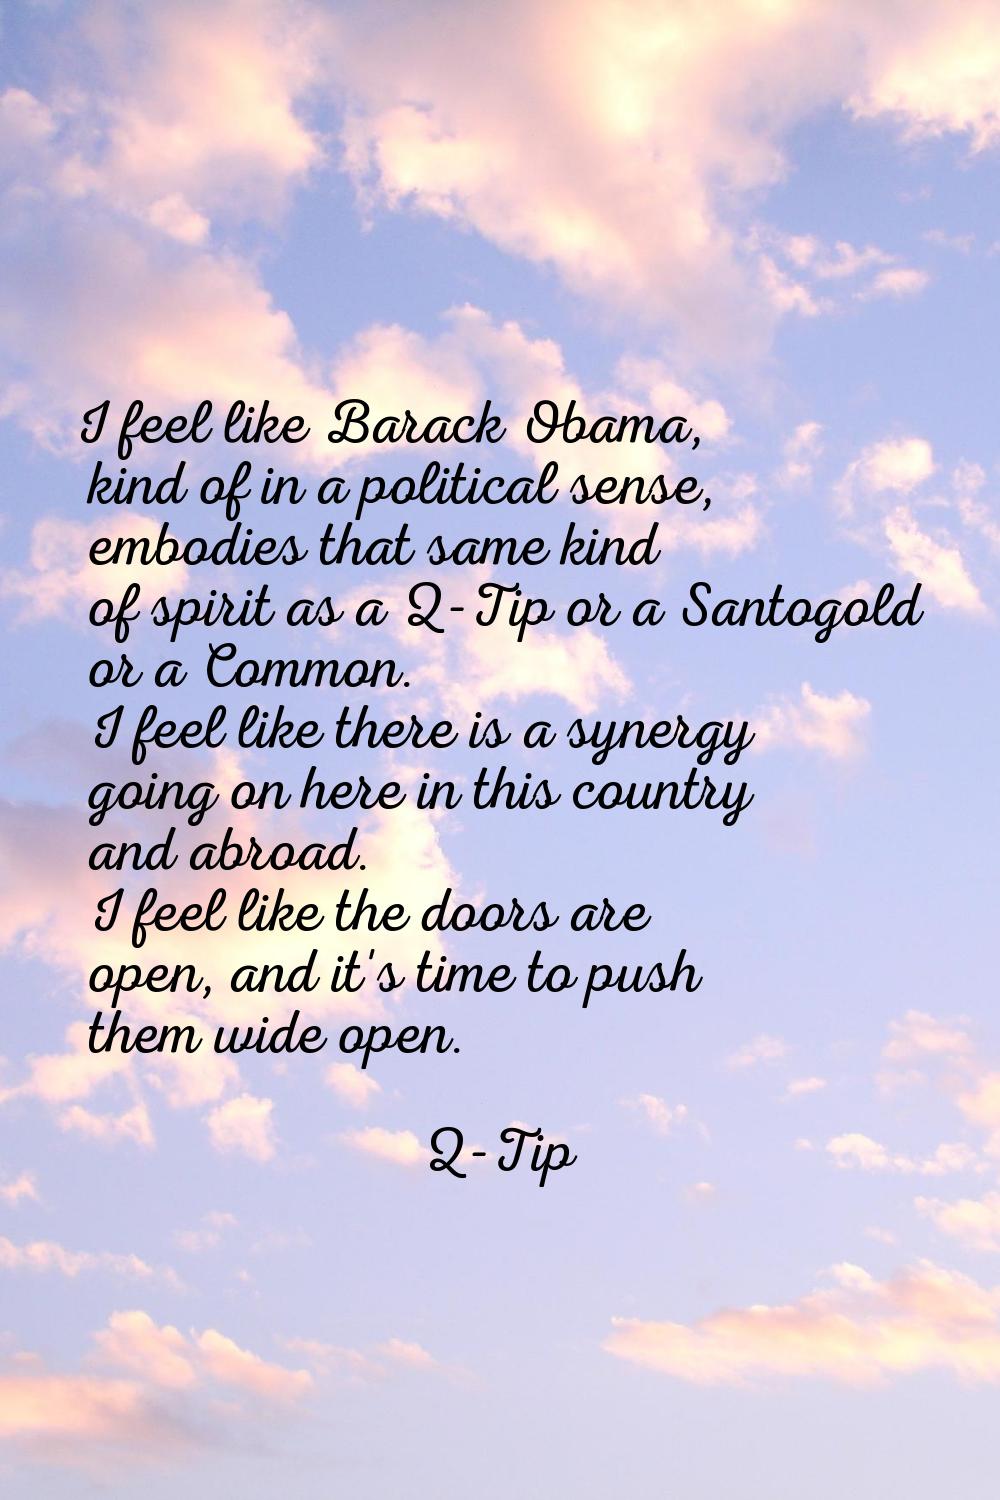 I feel like Barack Obama, kind of in a political sense, embodies that same kind of spirit as a Q-Ti